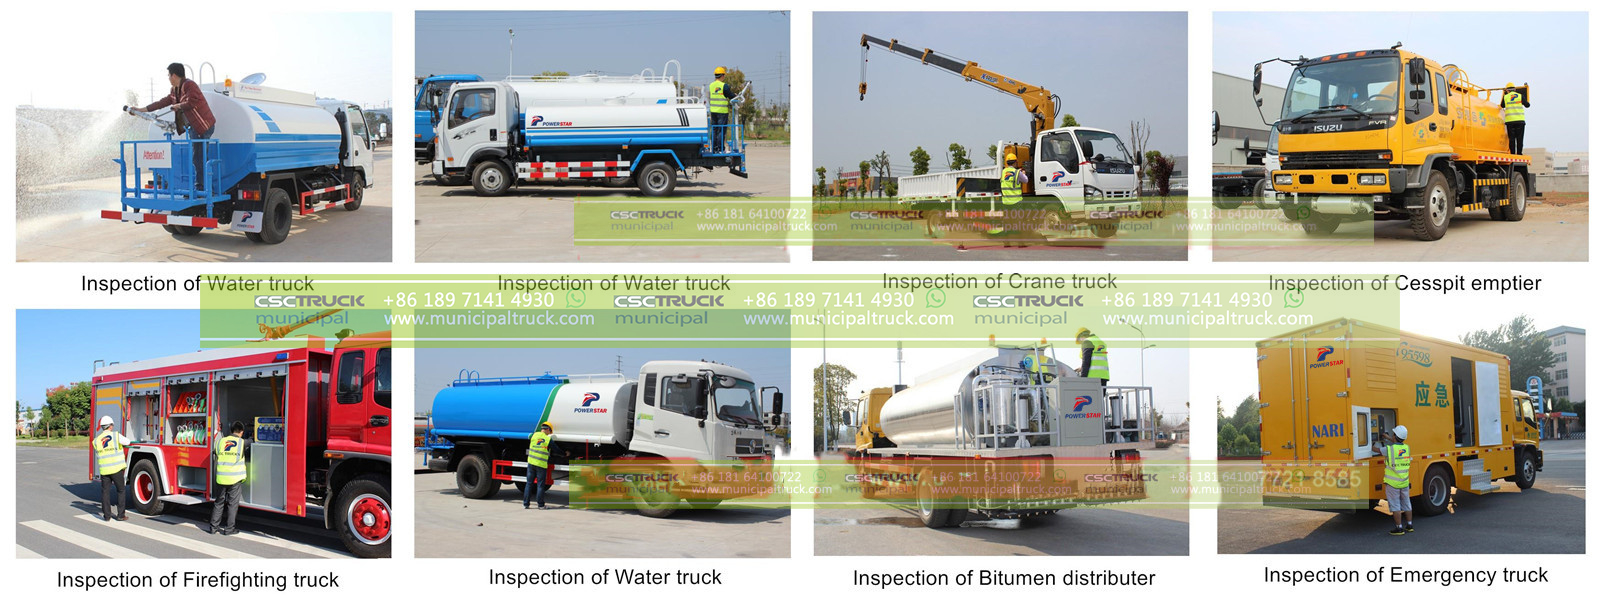 customer build CSCTRUCK Municipal tanker trucks for inspection and training